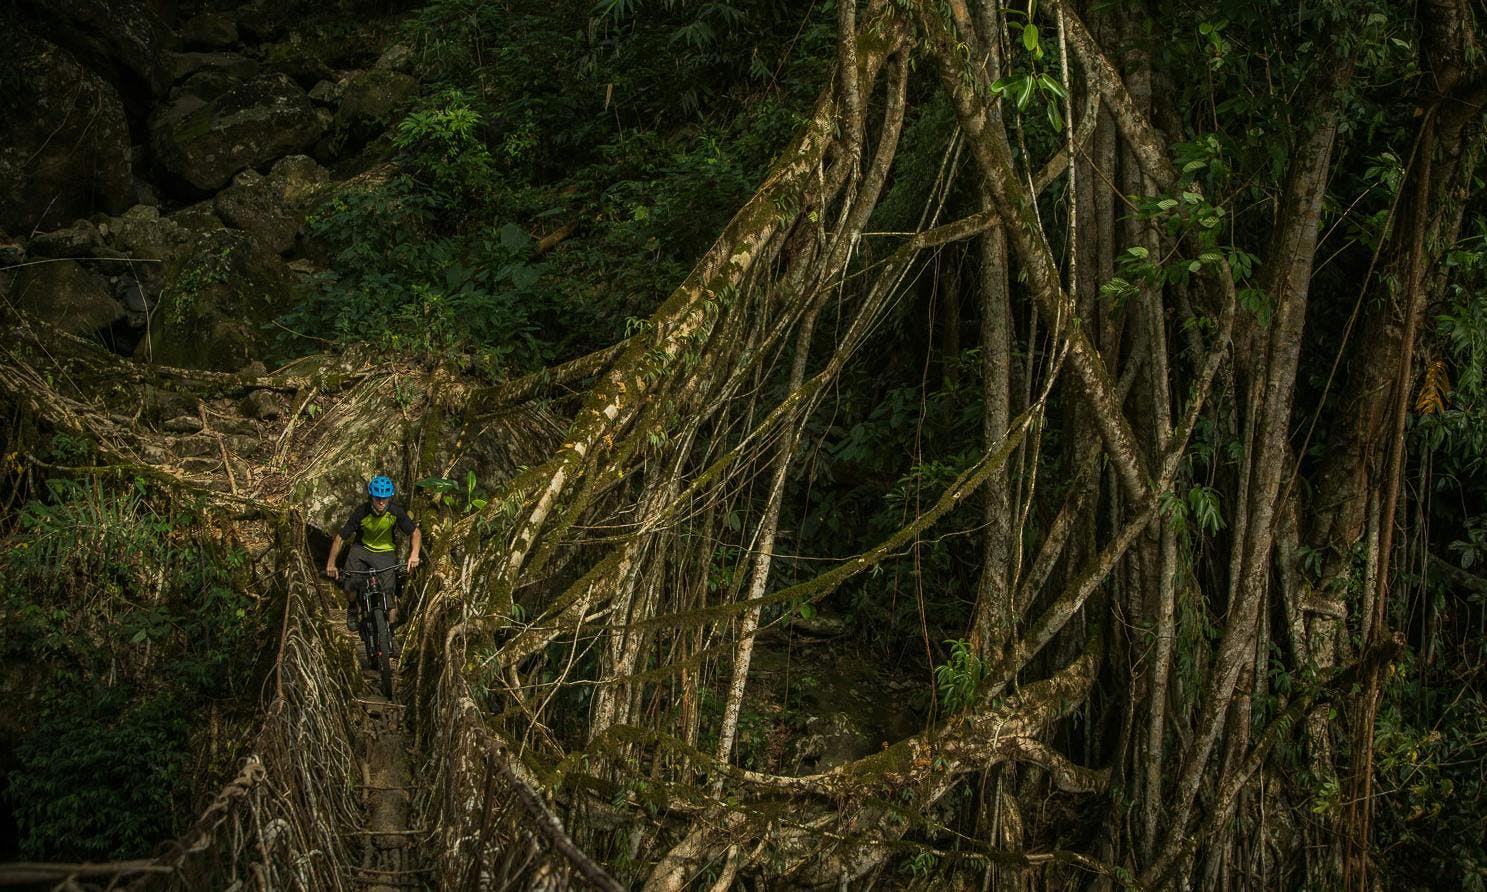 mountain biking over a root bridge in India